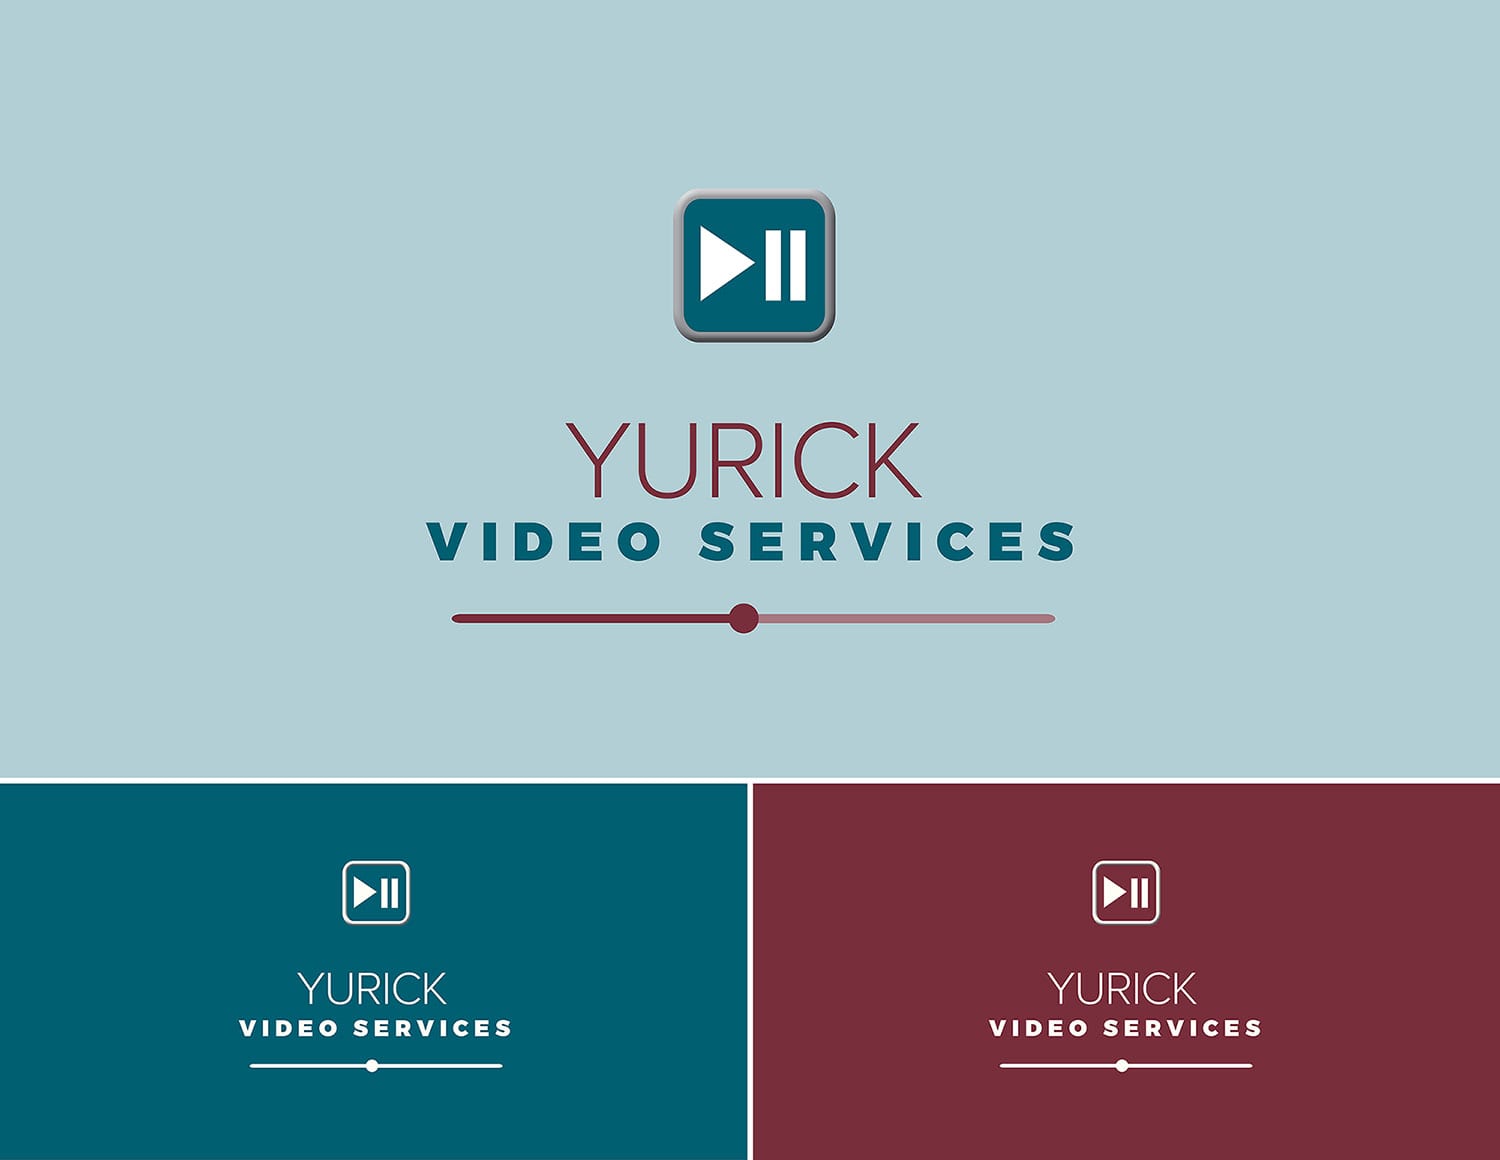 Yurick Video Services logo